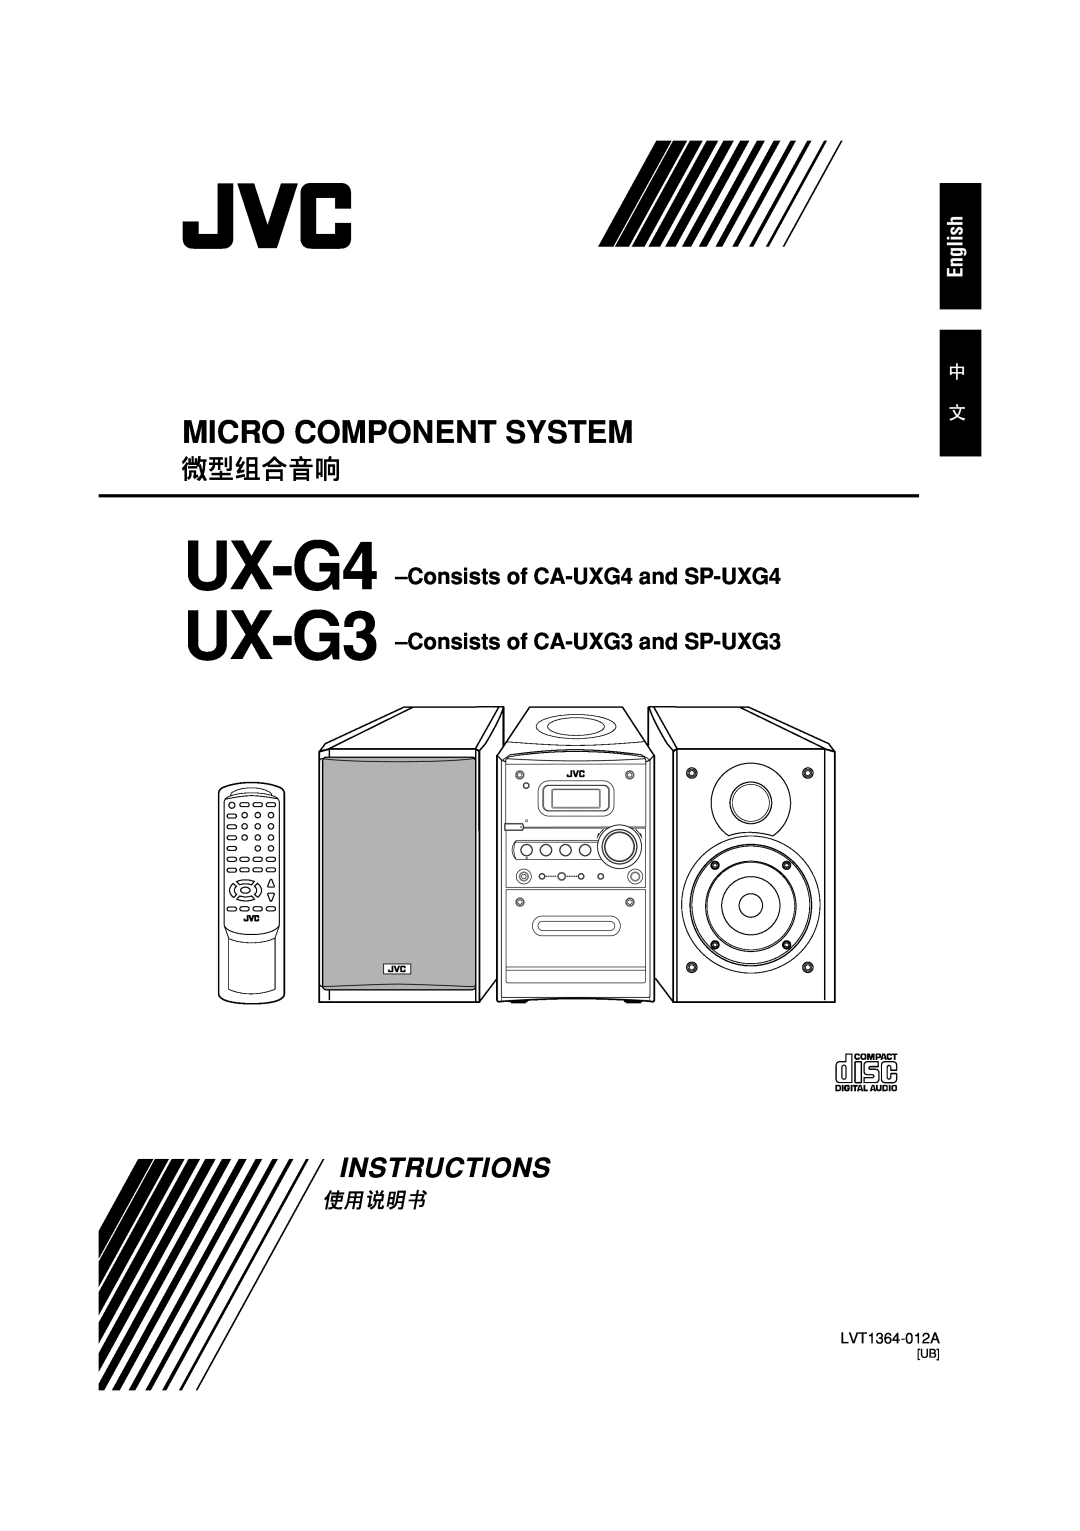 JVC LVT1364-006B UX-G4 UX-G3, Micro Component System, Instructions, Consistsof CA-UXG4and SP-UXG4, English, LVT1364-012A 